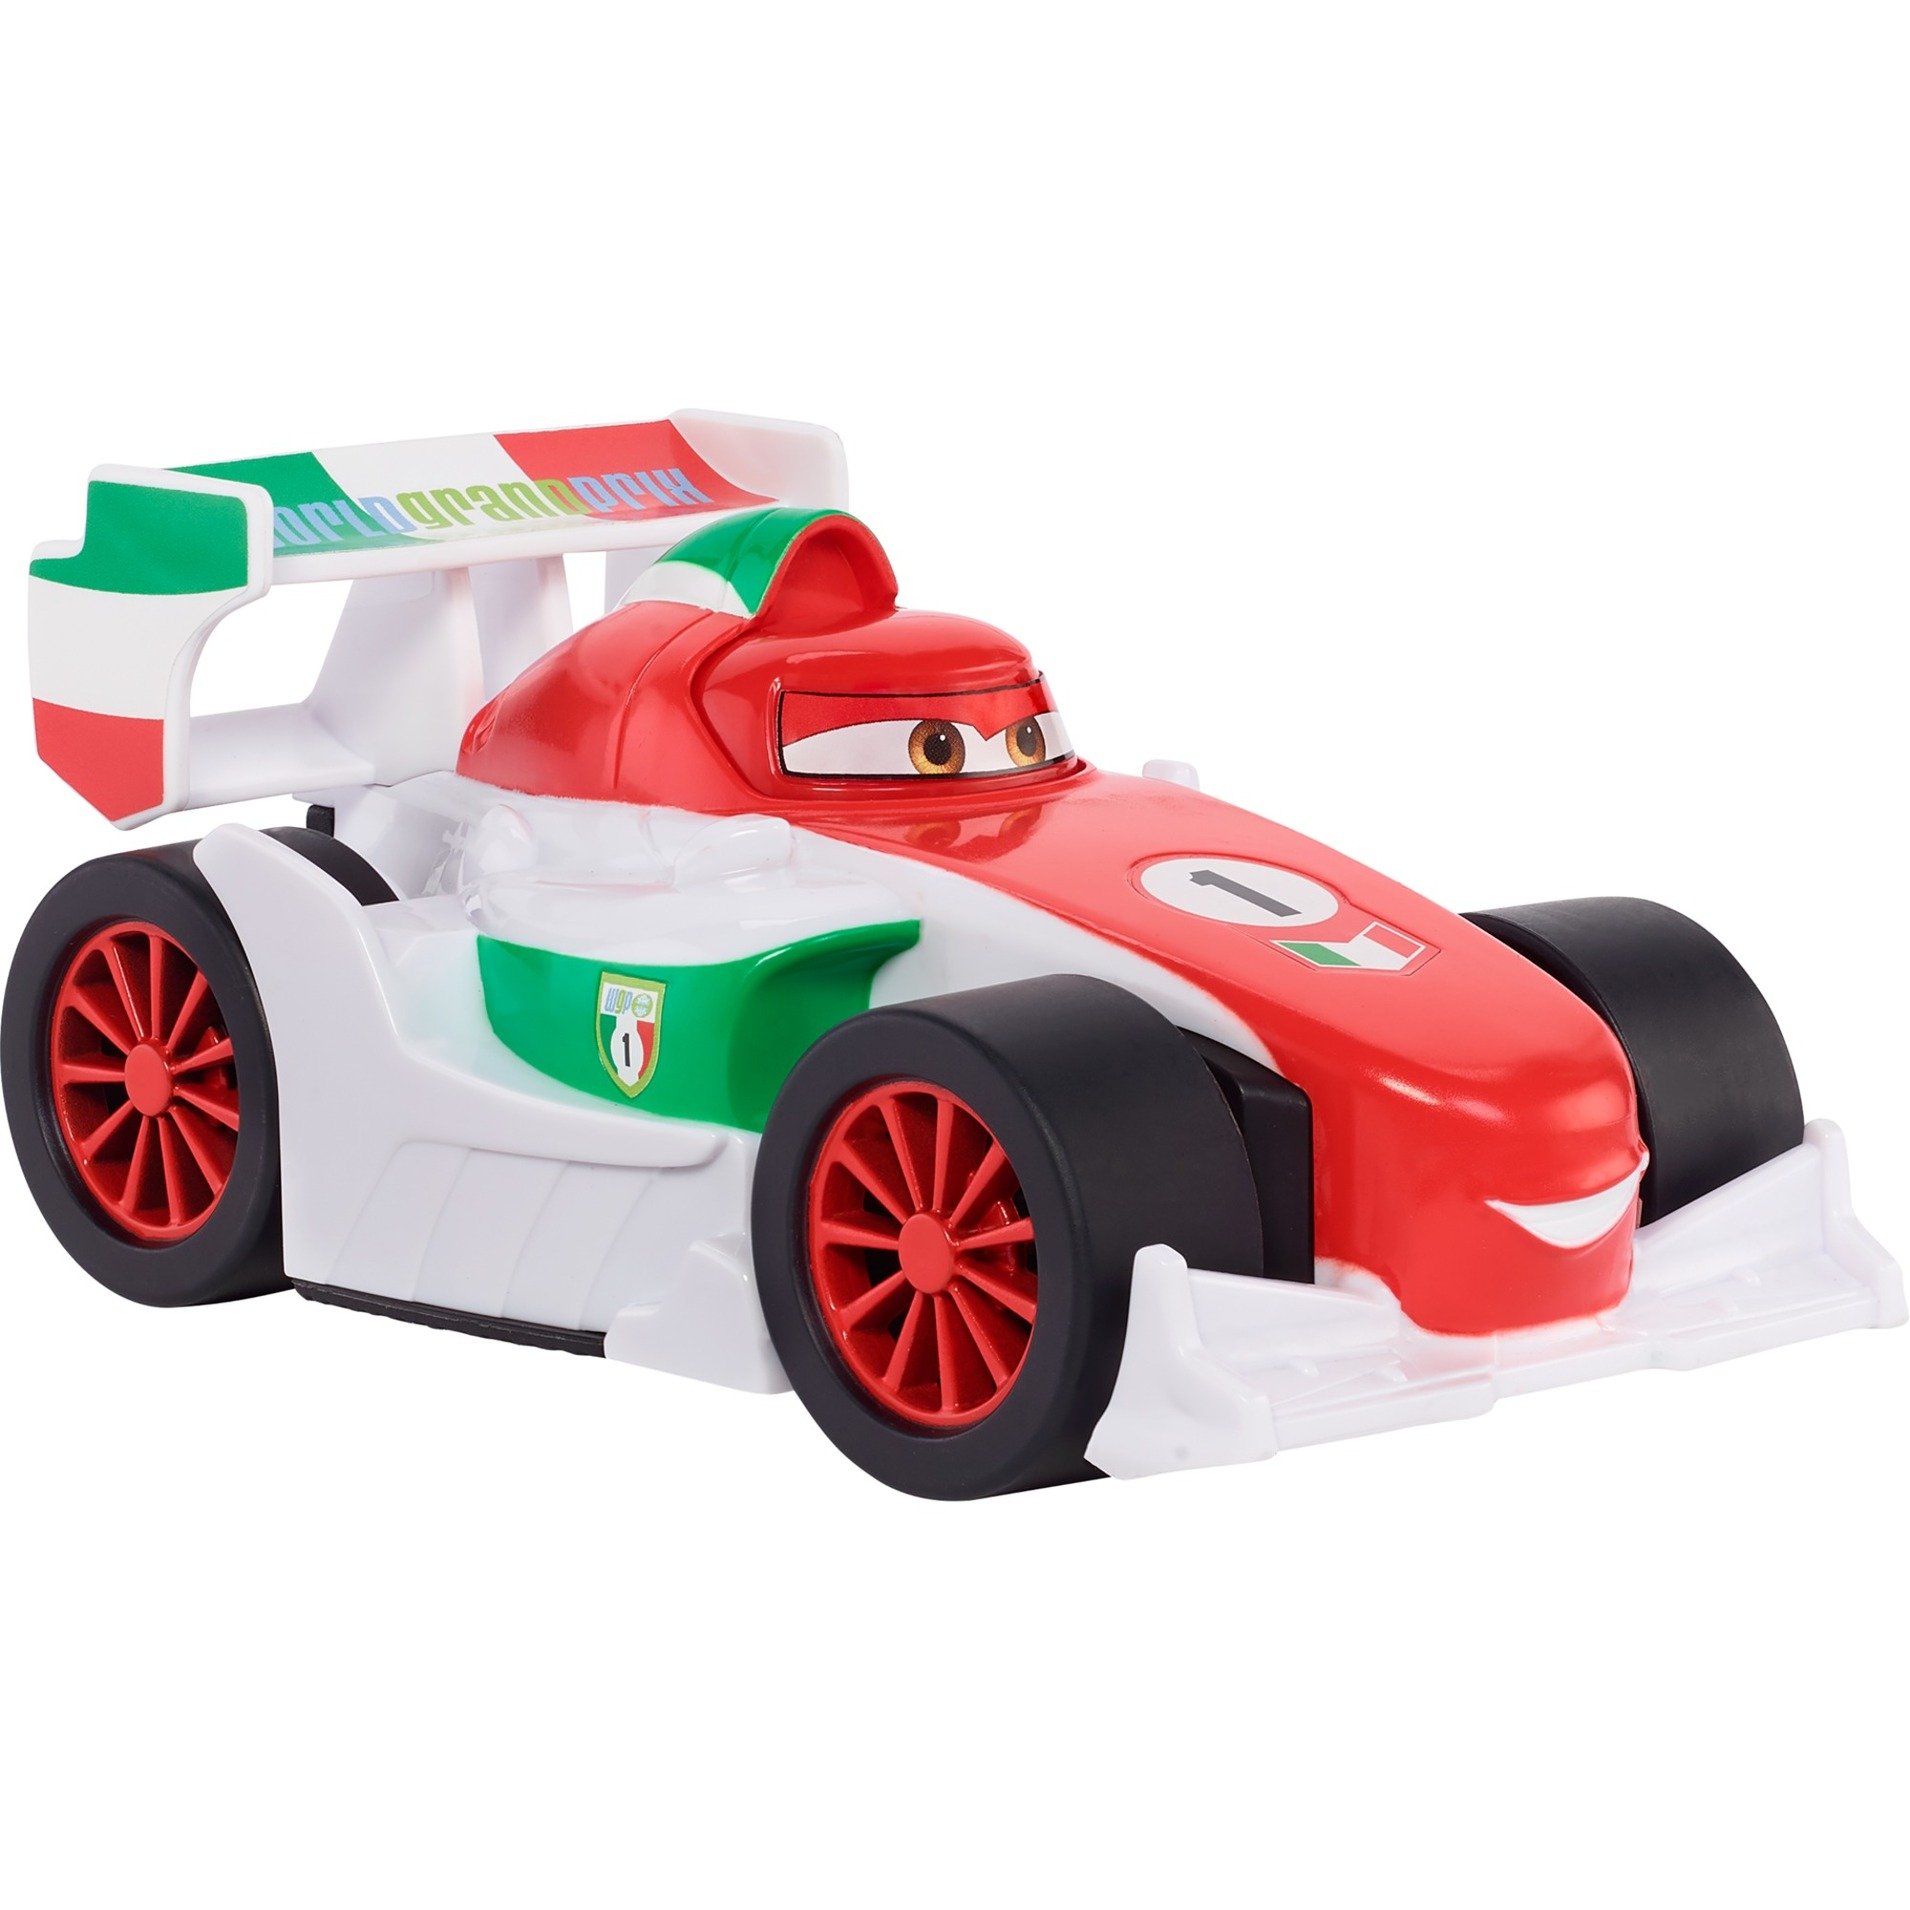 Image of Alternate - Disney Pixar Cars Track Talkers Francesco, Modellfahrzeug online einkaufen bei Alternate